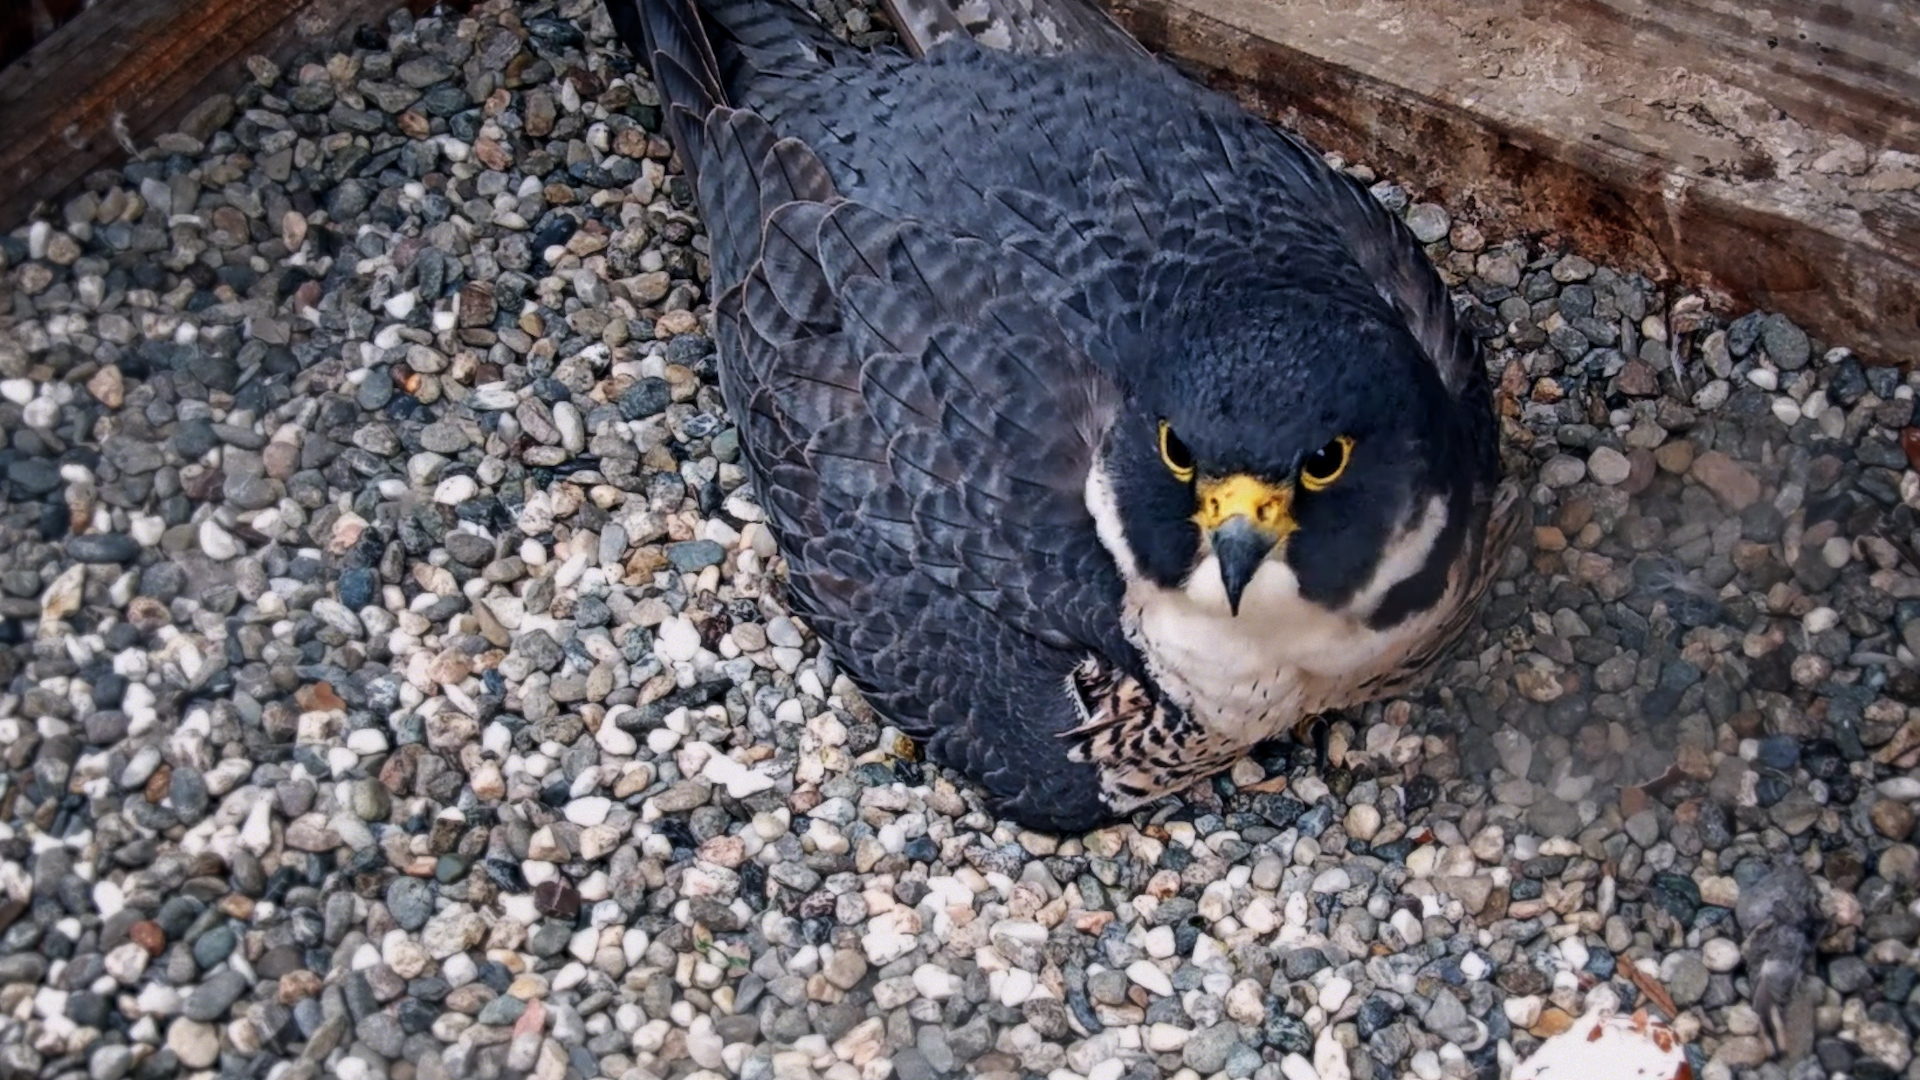 Peregrine falcon protecting its eggs at UC Berkeley / Cal Falcons webcam